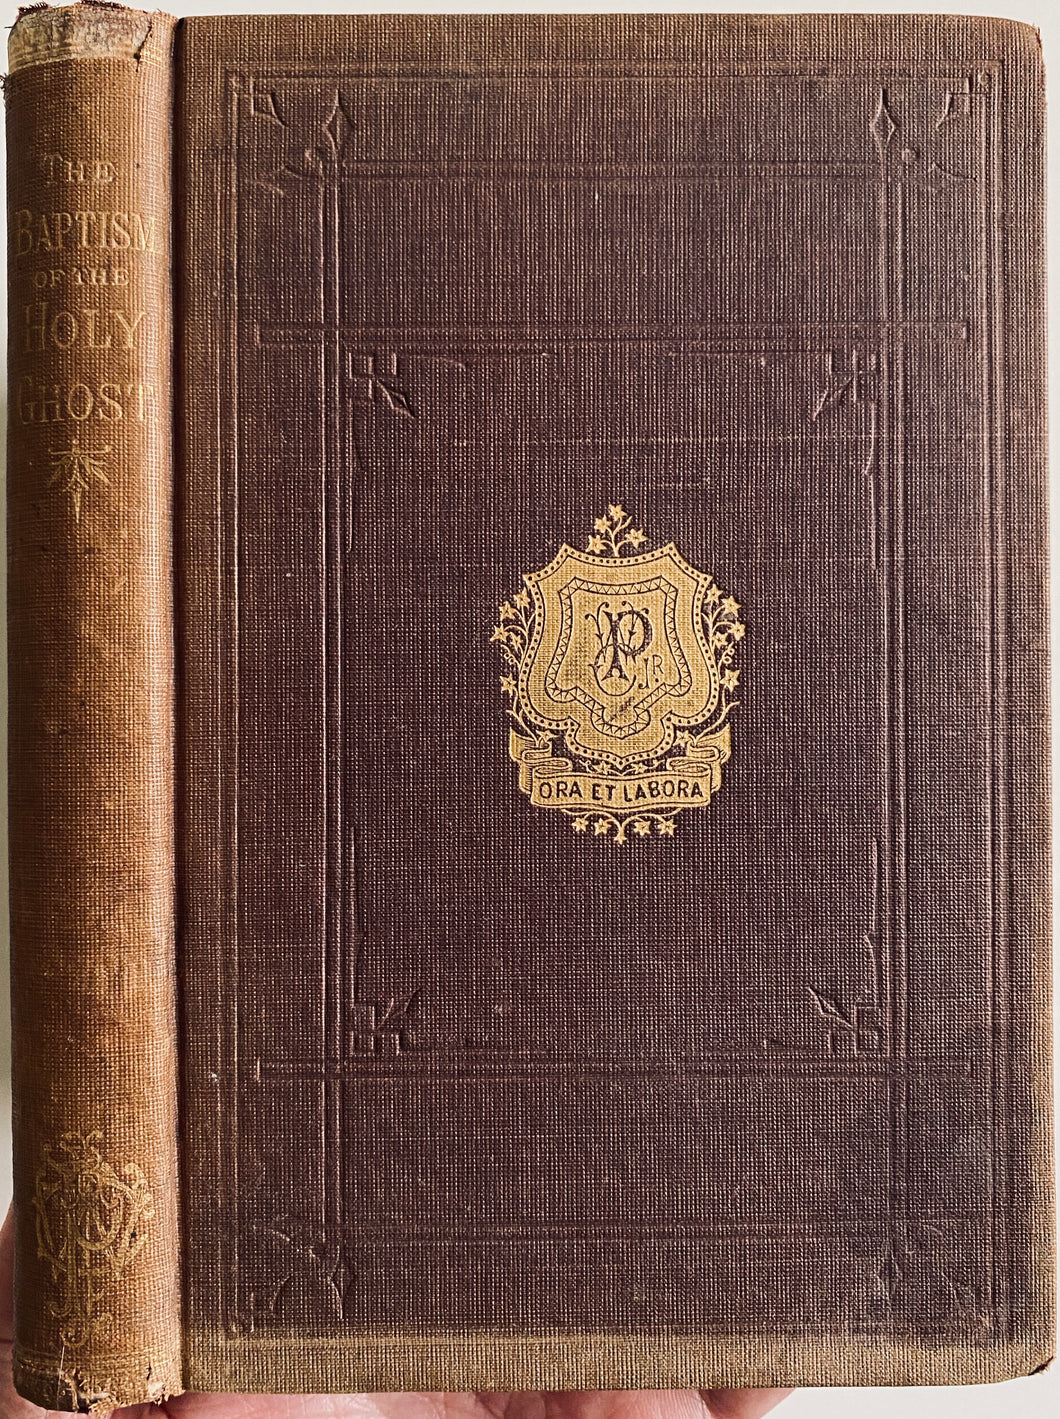 1870 ASA MAHAN. First Edition of 